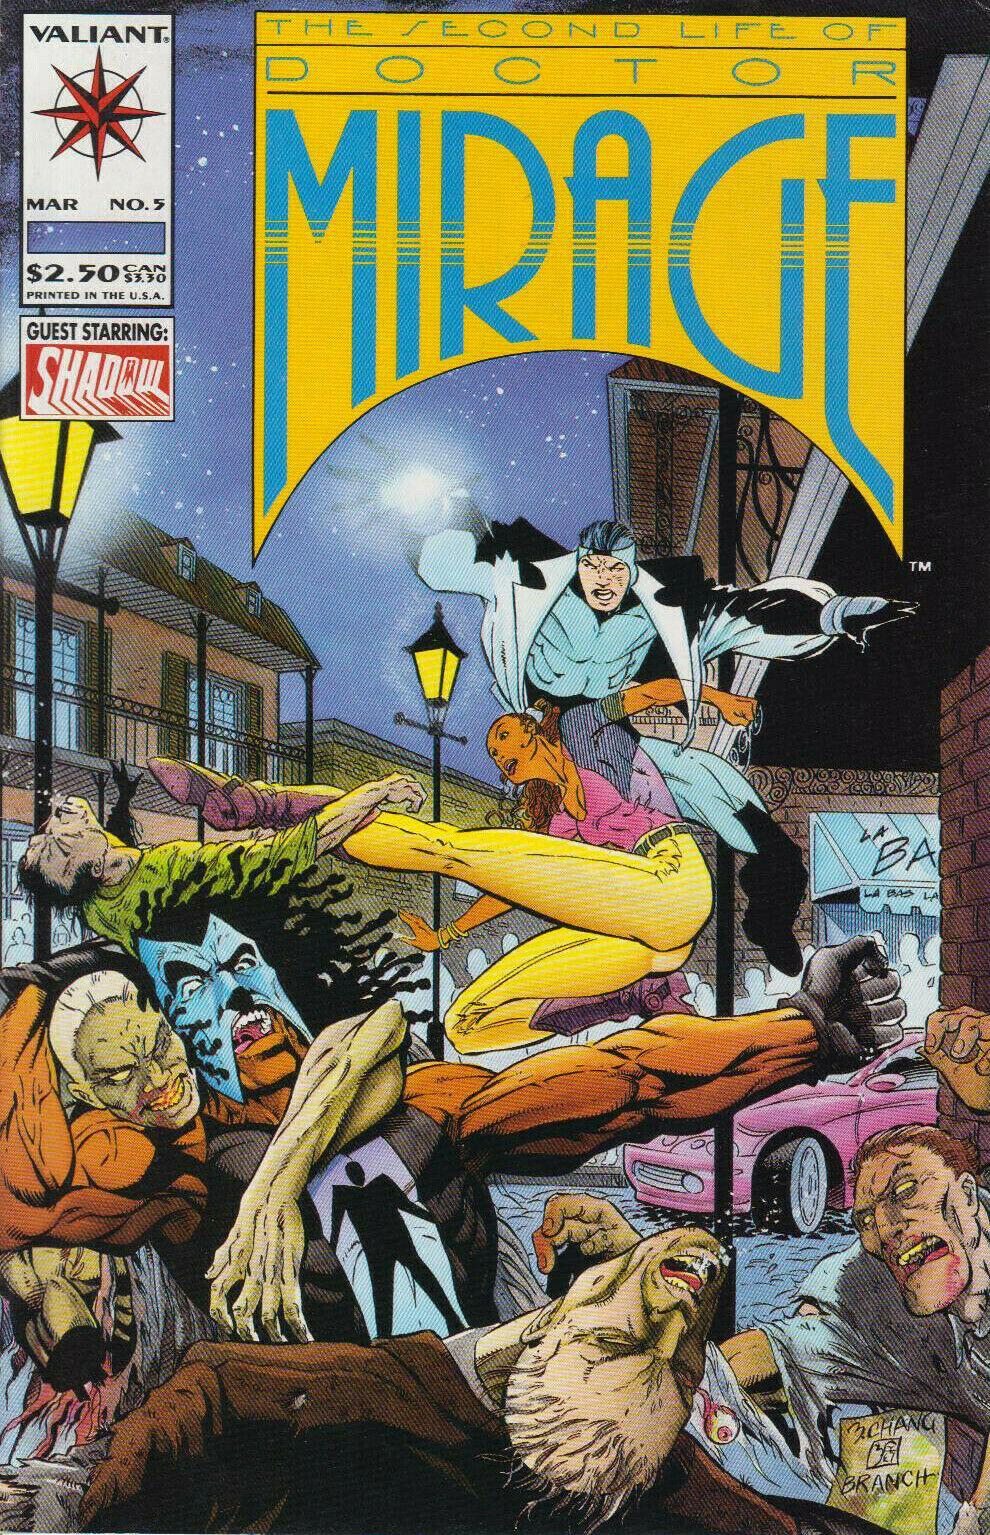 The Second Life of Doctor Mirage #5 Valiant Comics 1994